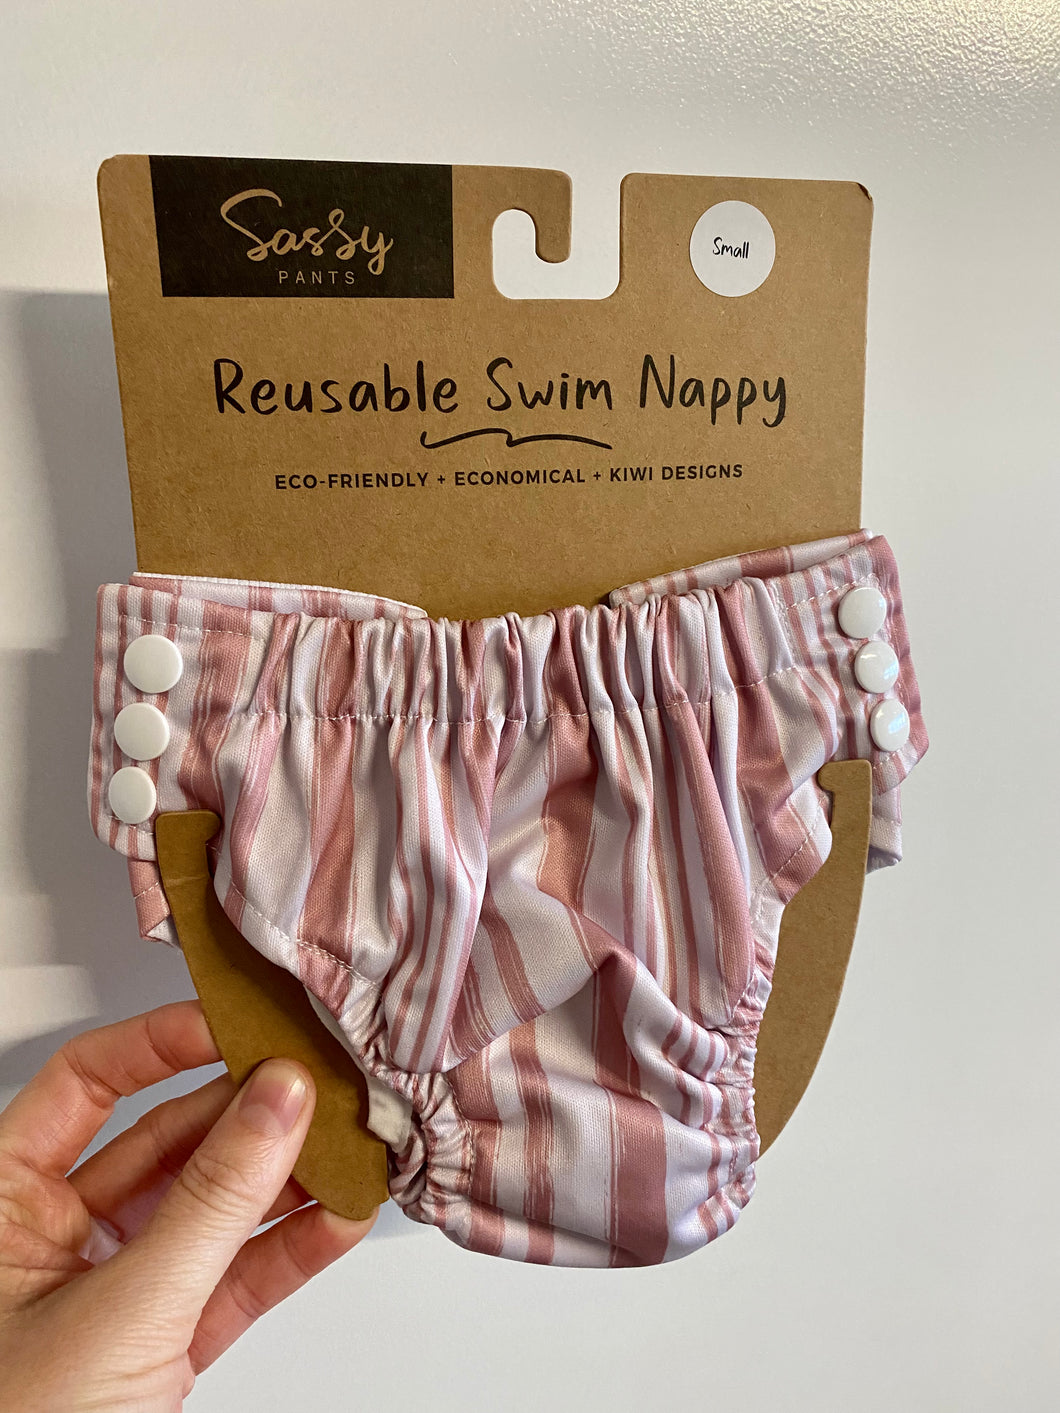 Sassy Pants Reusable Swim Nappy - Candy Stripe Size S Only 6-12mths